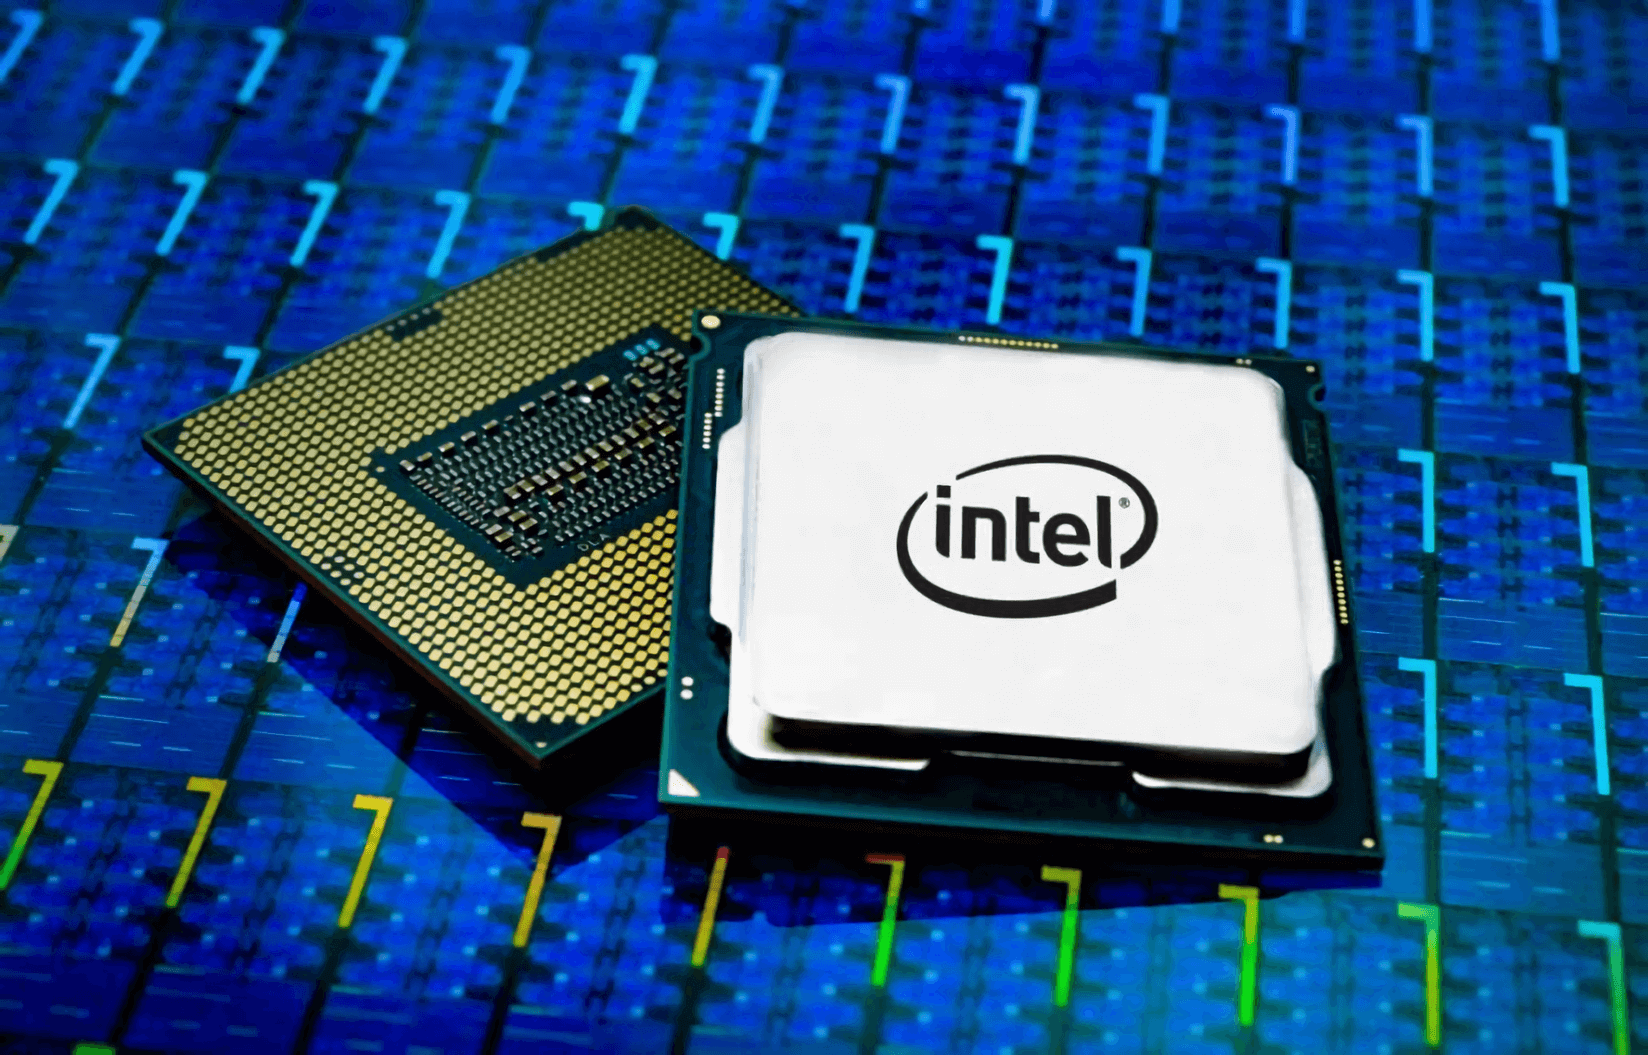 Leaked Intel roadmap shows its 10nm desktop CPUs won't arrive until 2022